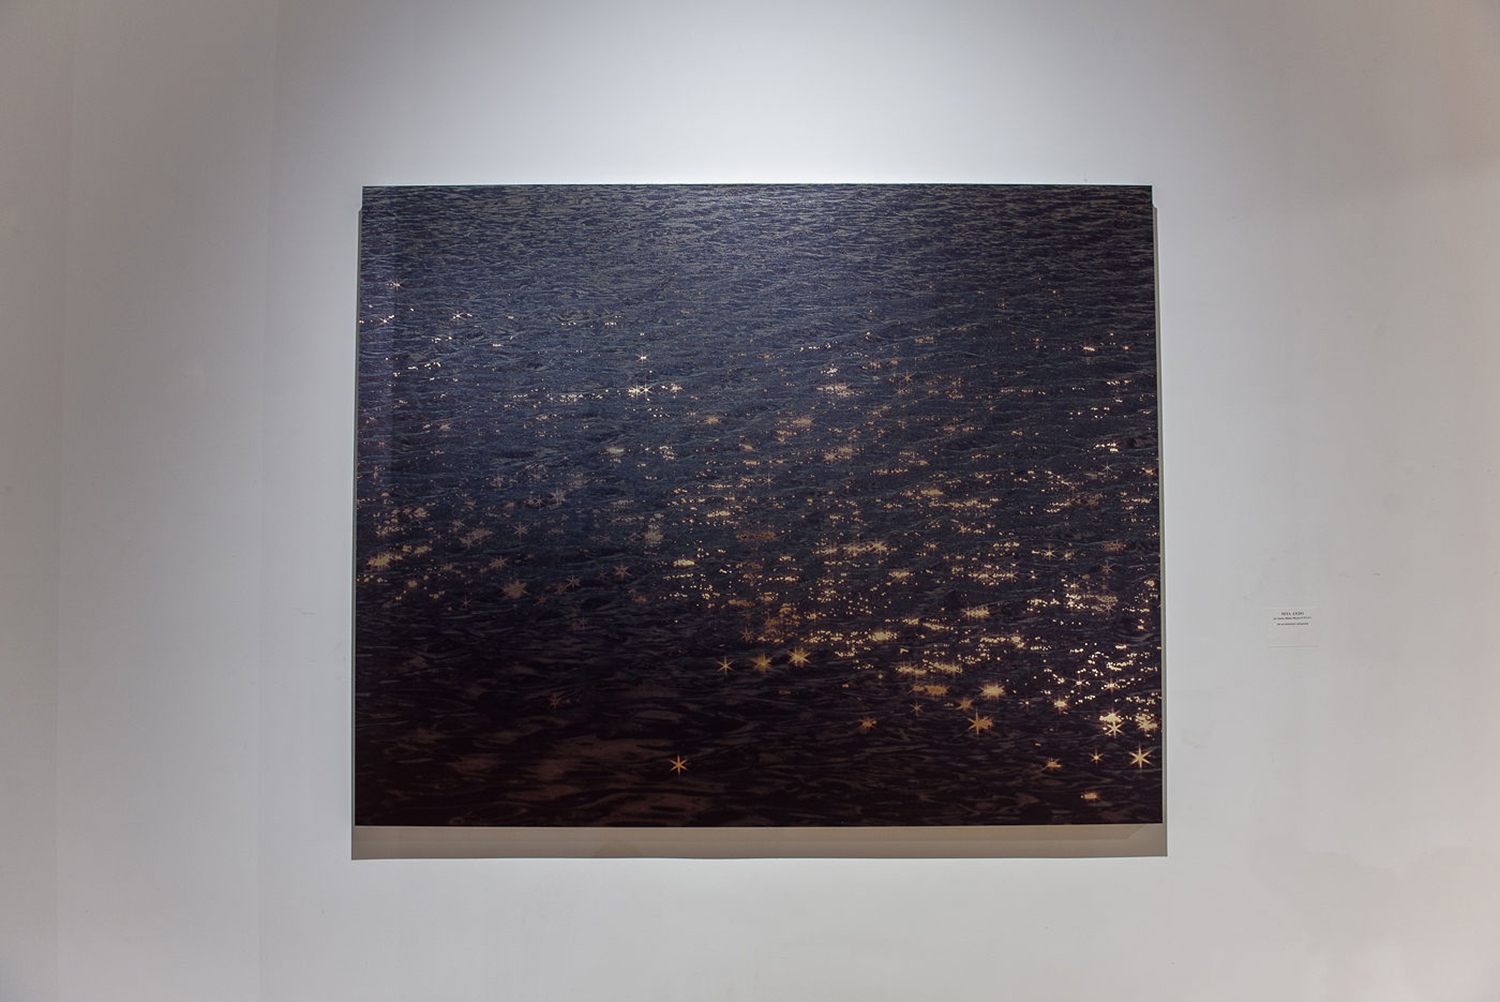  “WAVES BECOMING LIGHT” CORNELL ART MUSEUM, 2019 